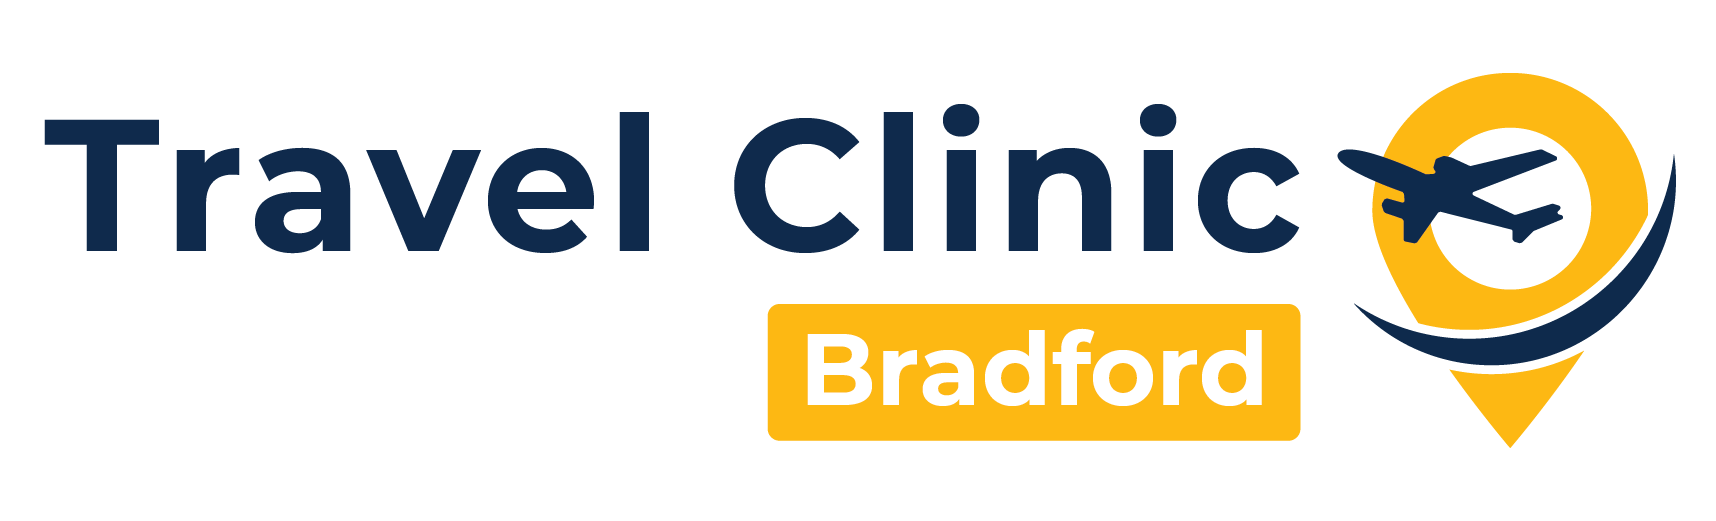 Travel Clinic Bradford 